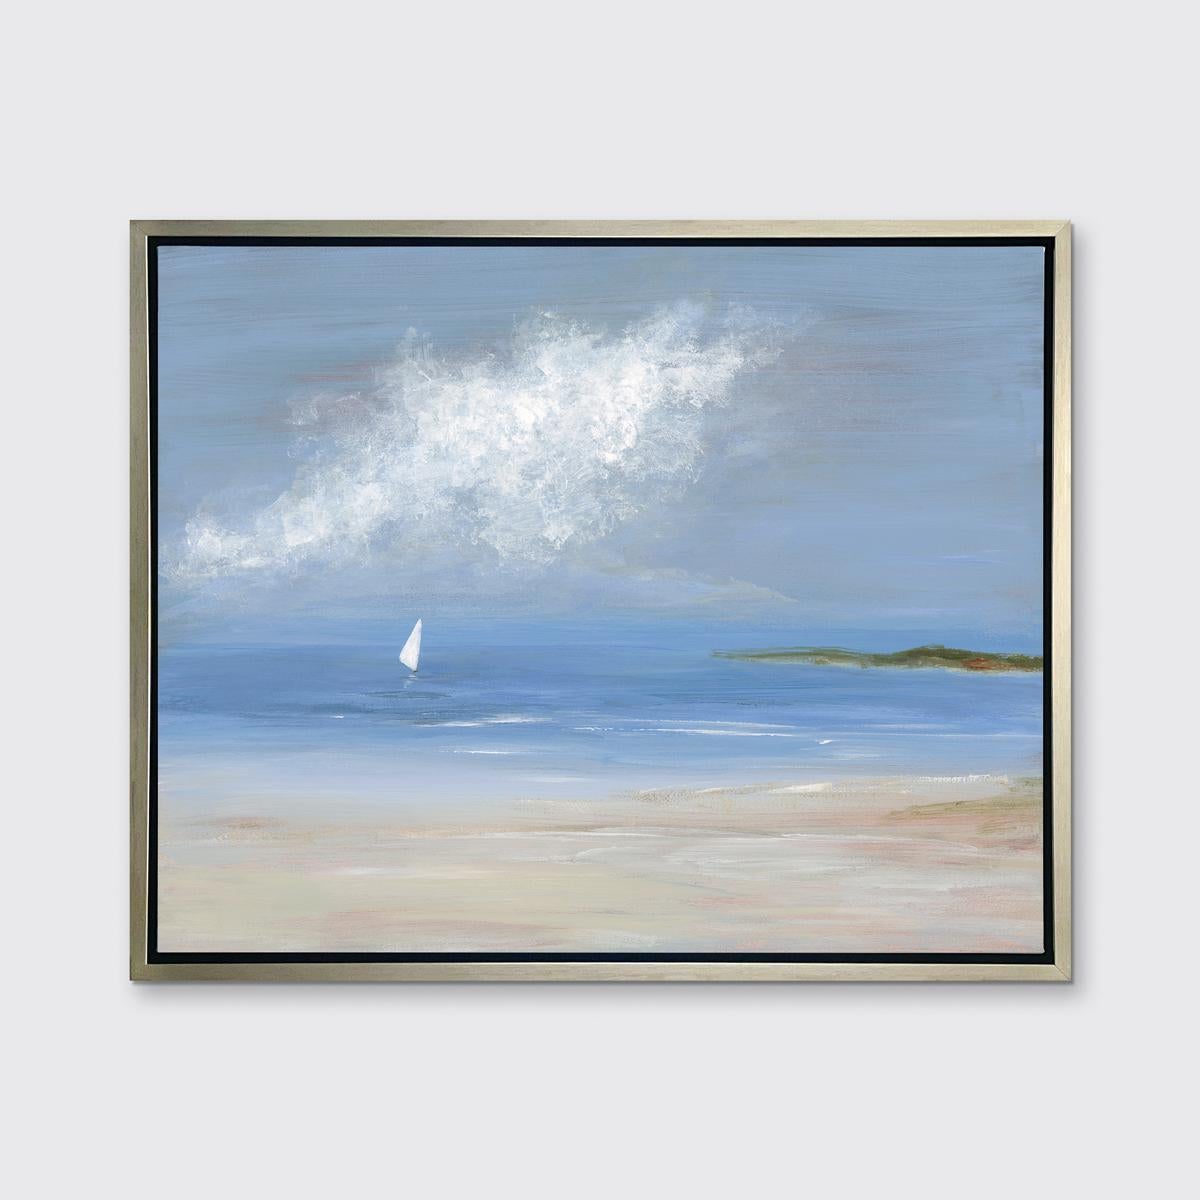 S. Cora Aldo Landscape Print - "Sunday Sail, " Framed Limited Edition Giclee Print, 48" x 60"